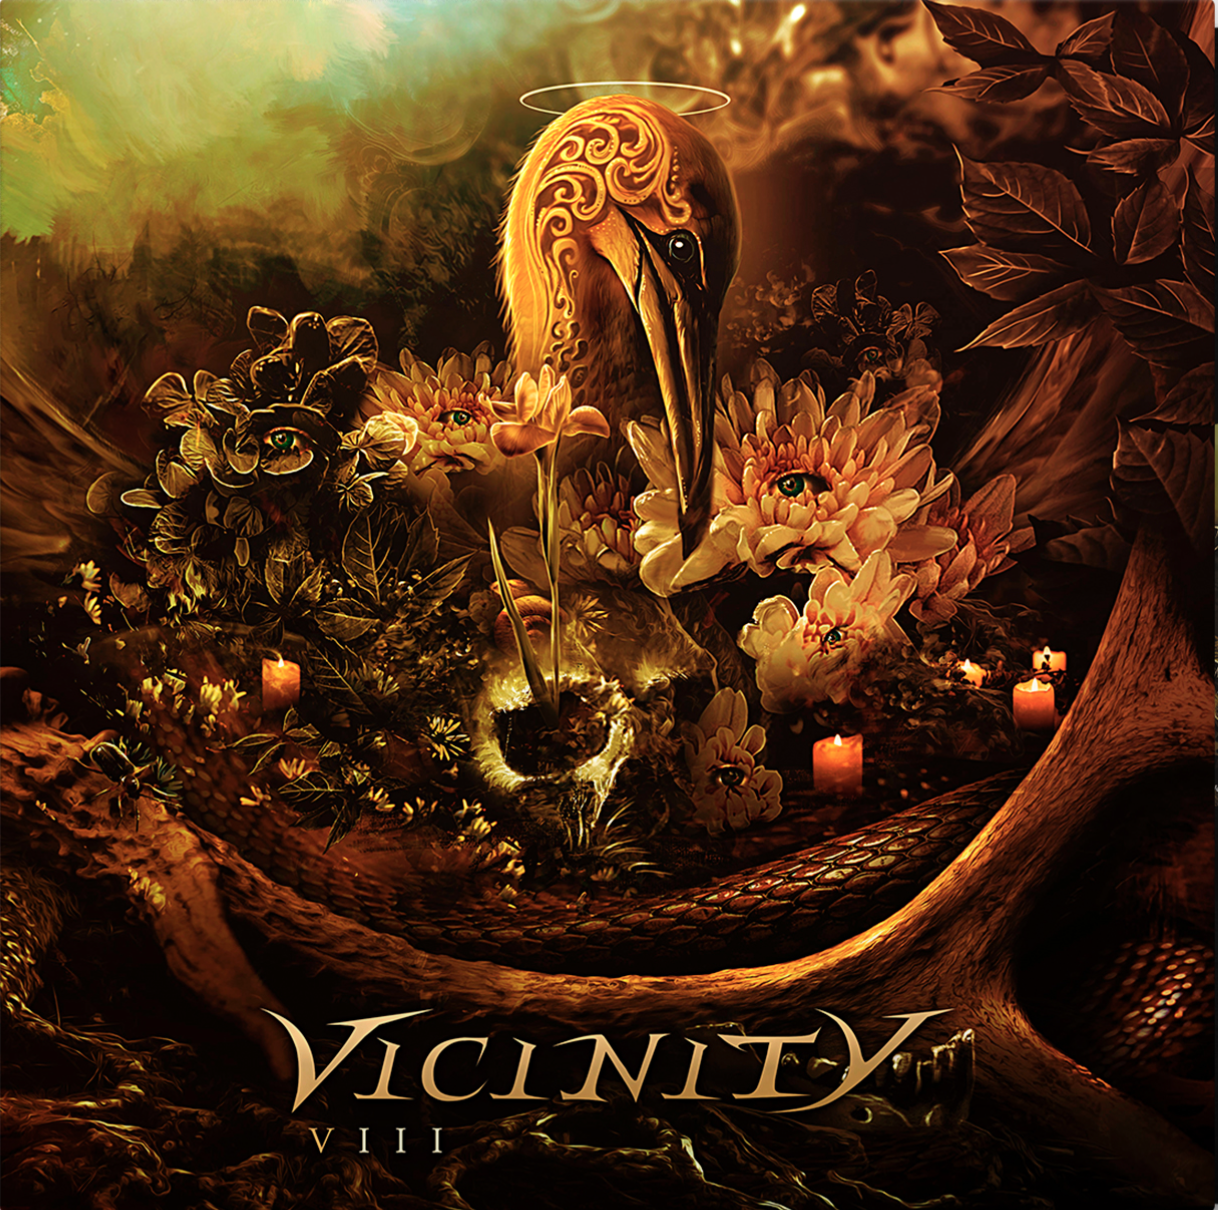 Vicinity - Distance (clip)